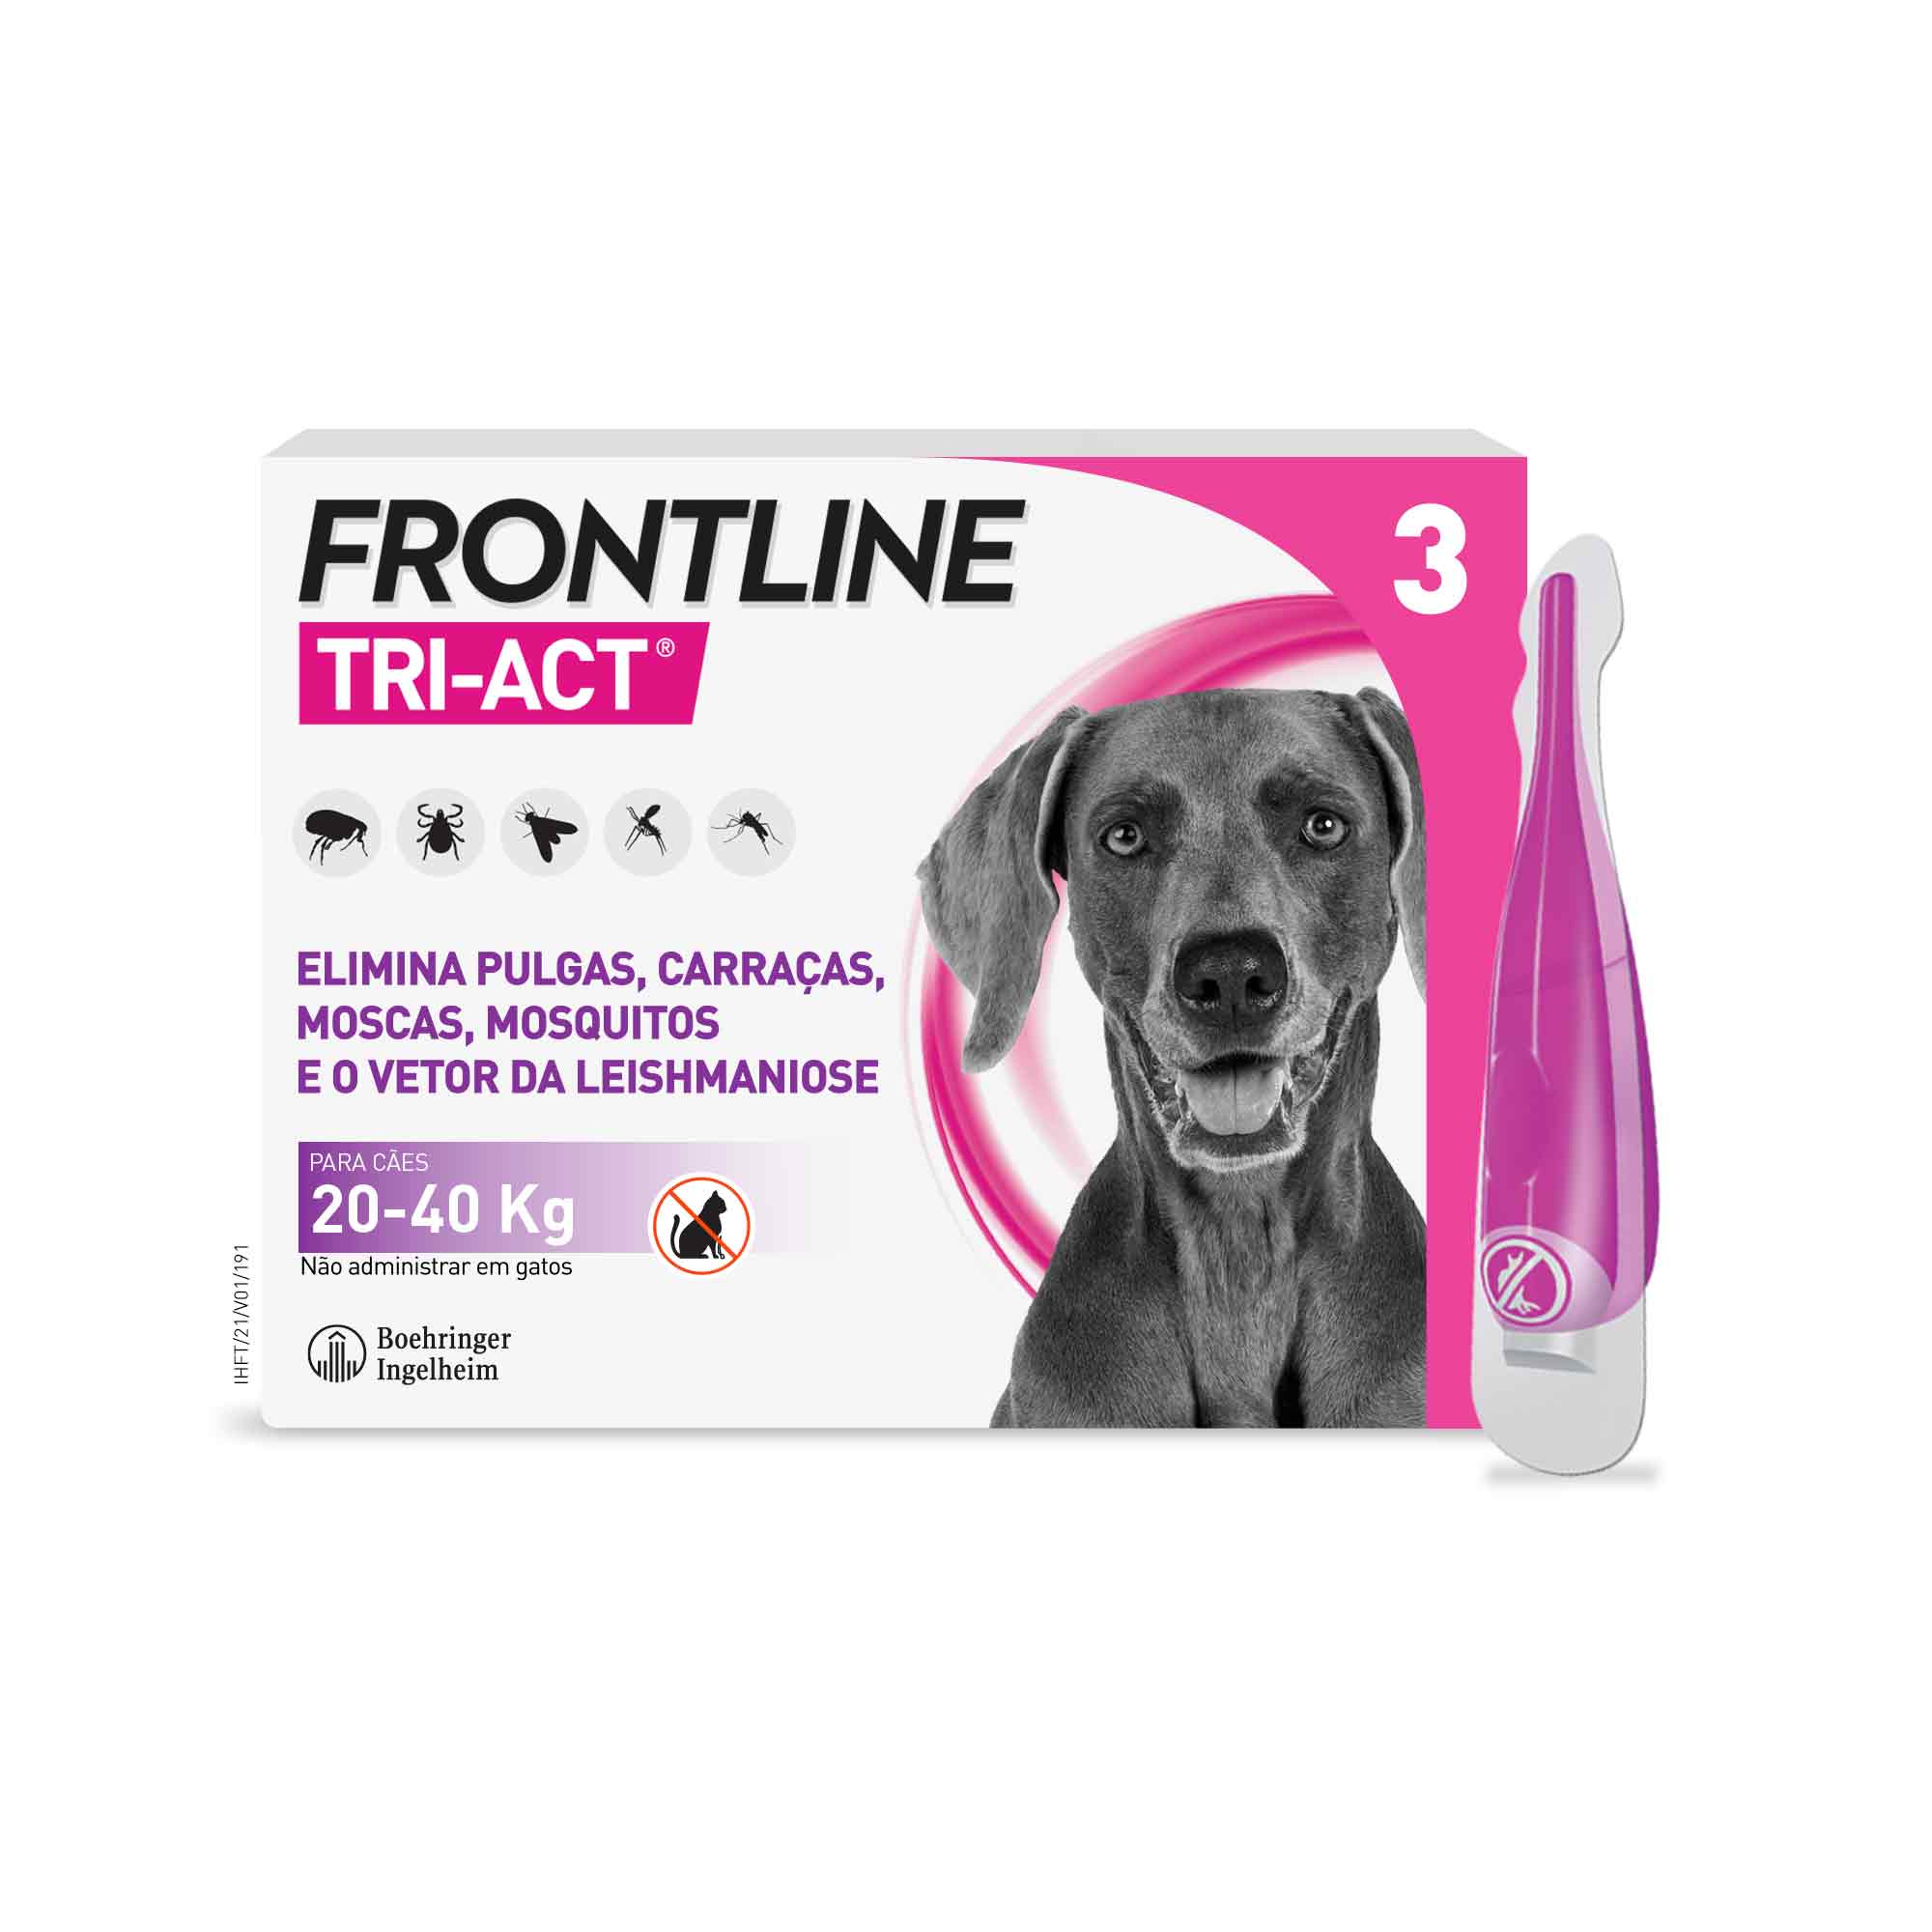 FRONTLINE TRI-ACT CÃO 20-40 KG X 3